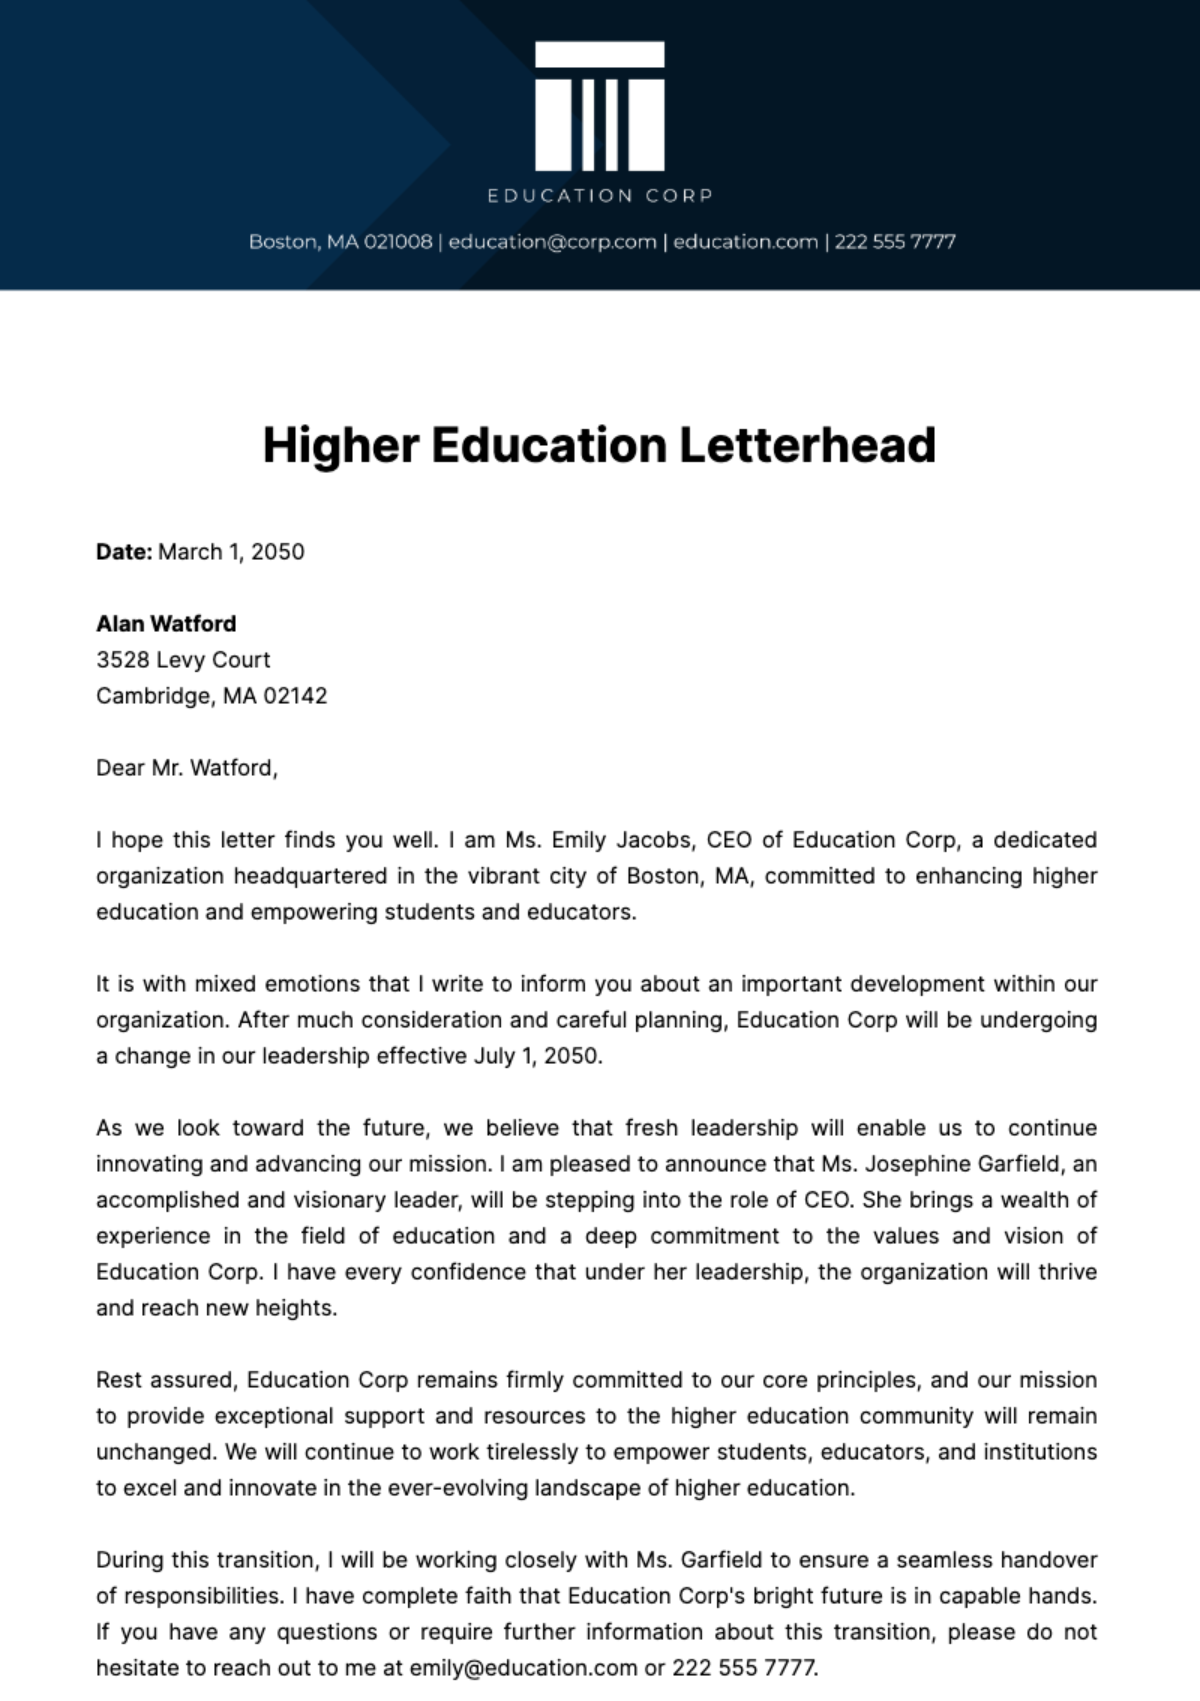 Free Higher Education Letterhead Template